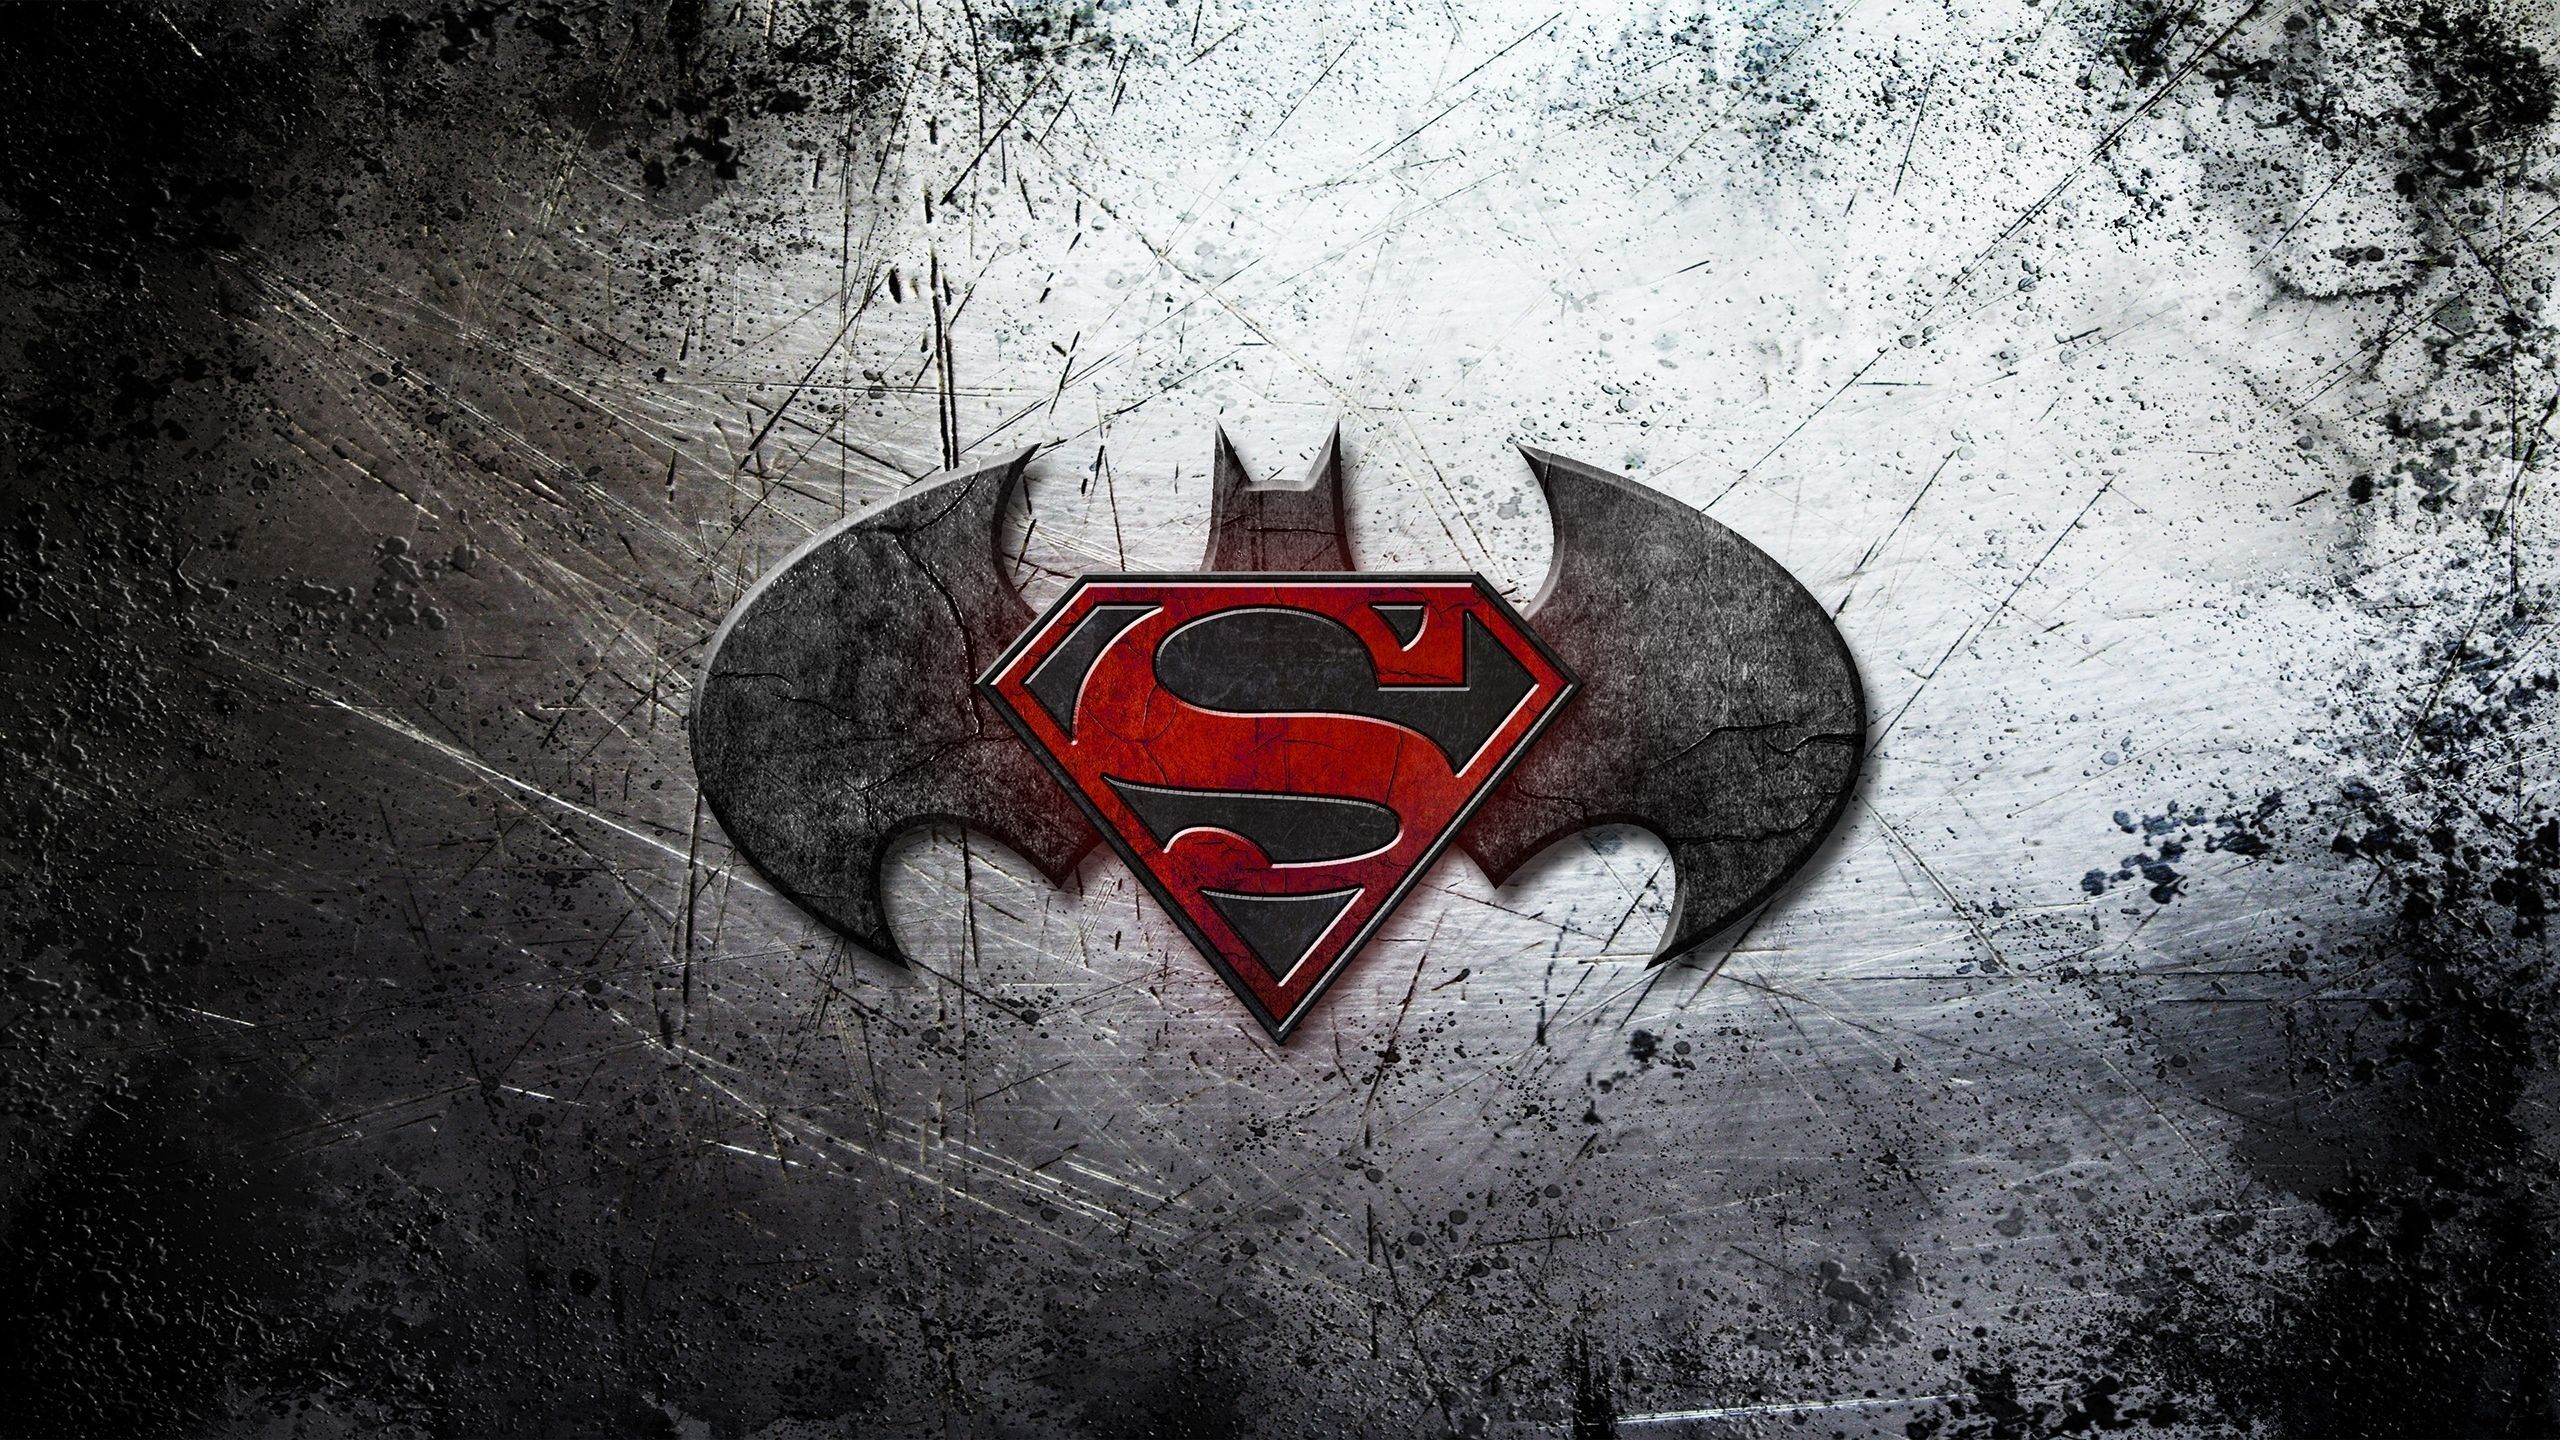 2560x1440 Best Of Batman Vs Superman Phone Wallpapers | Superman hd wallpaper, Batman and superman, Superman wallpaper